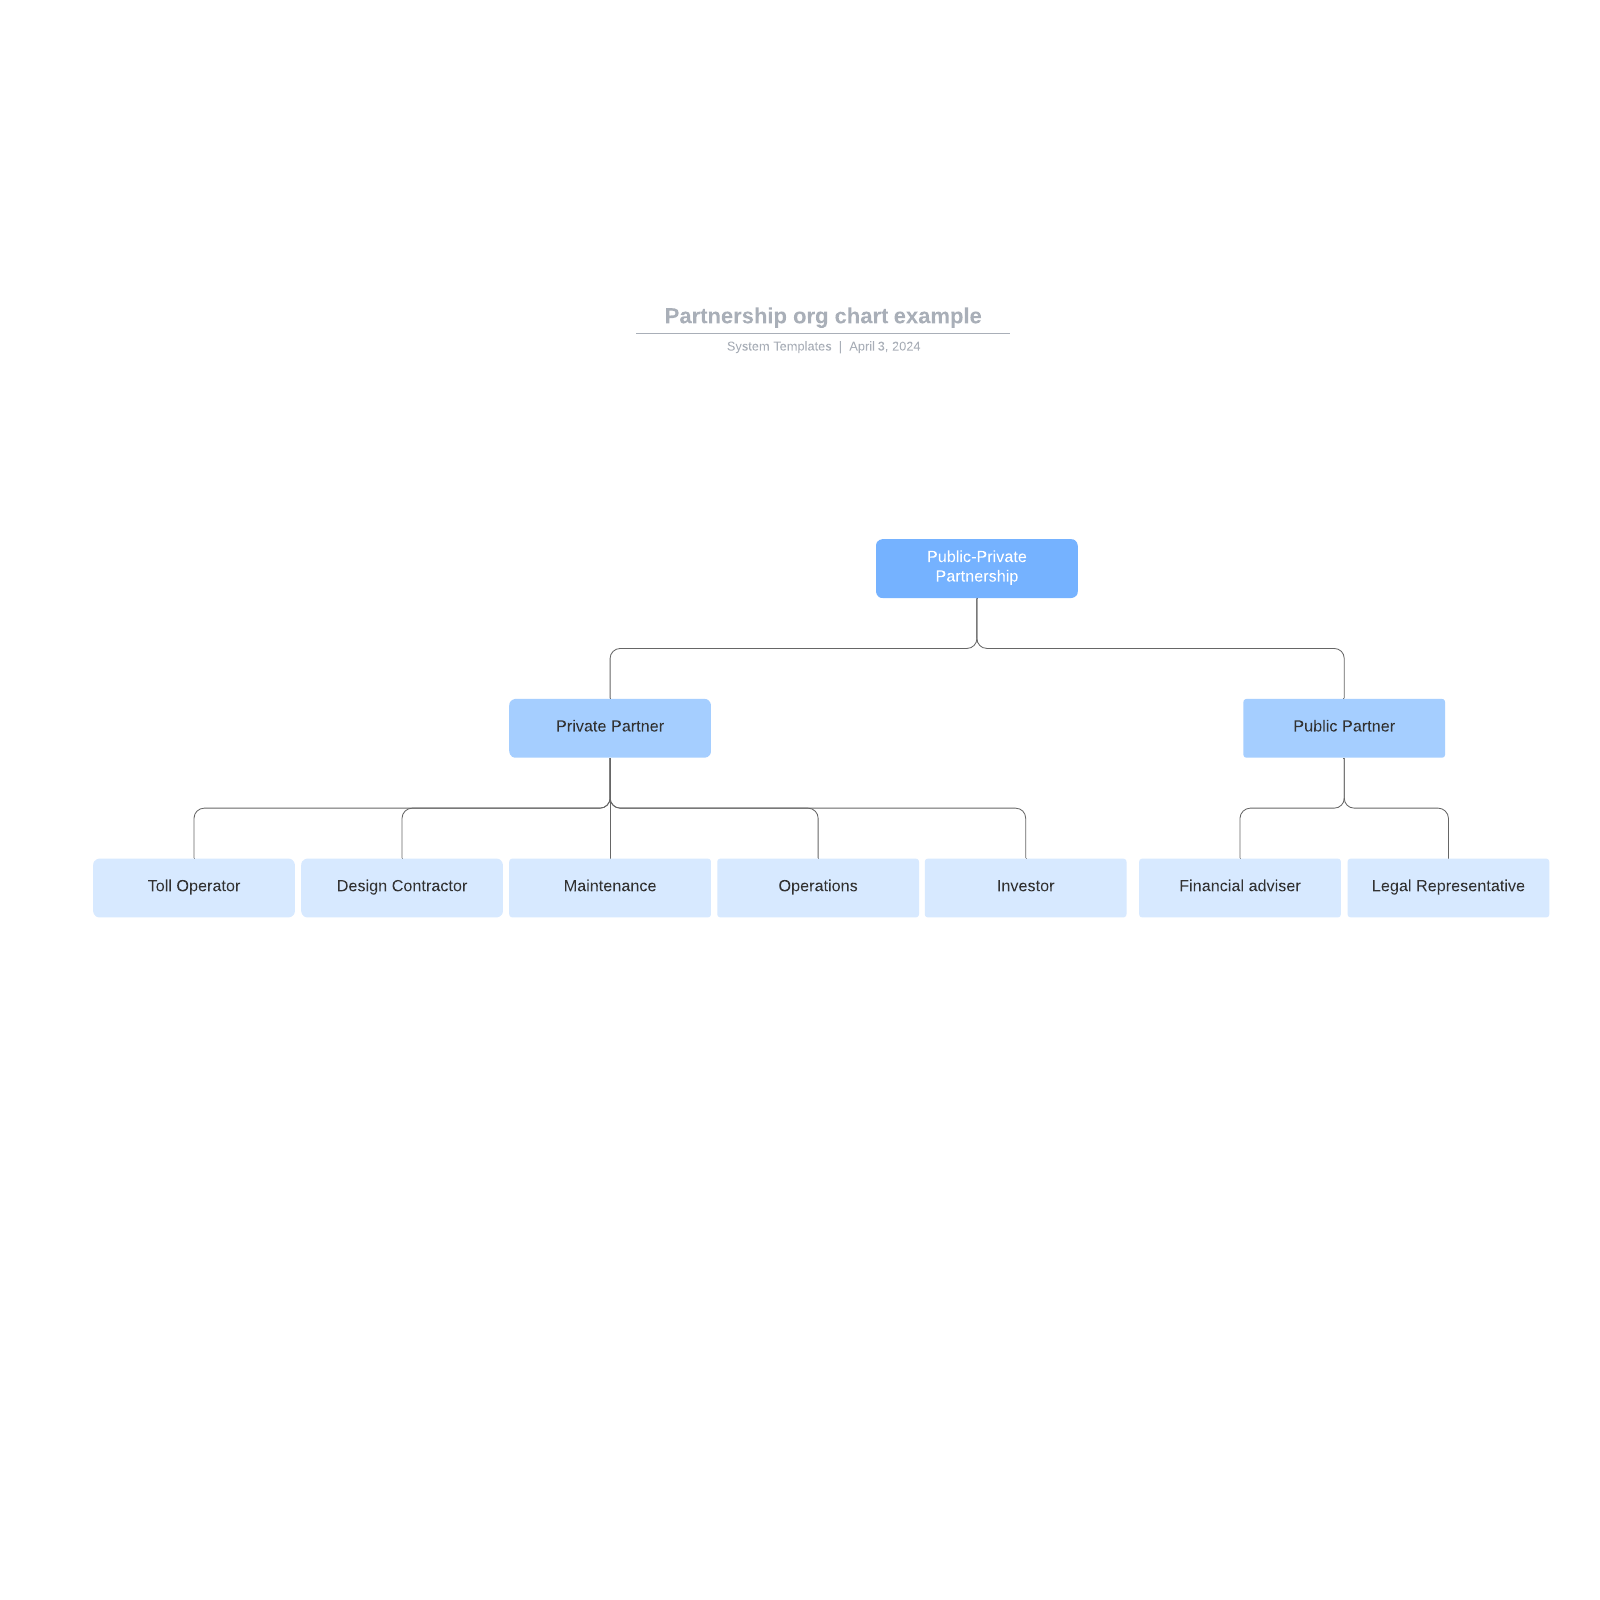 Partnership org chart example example